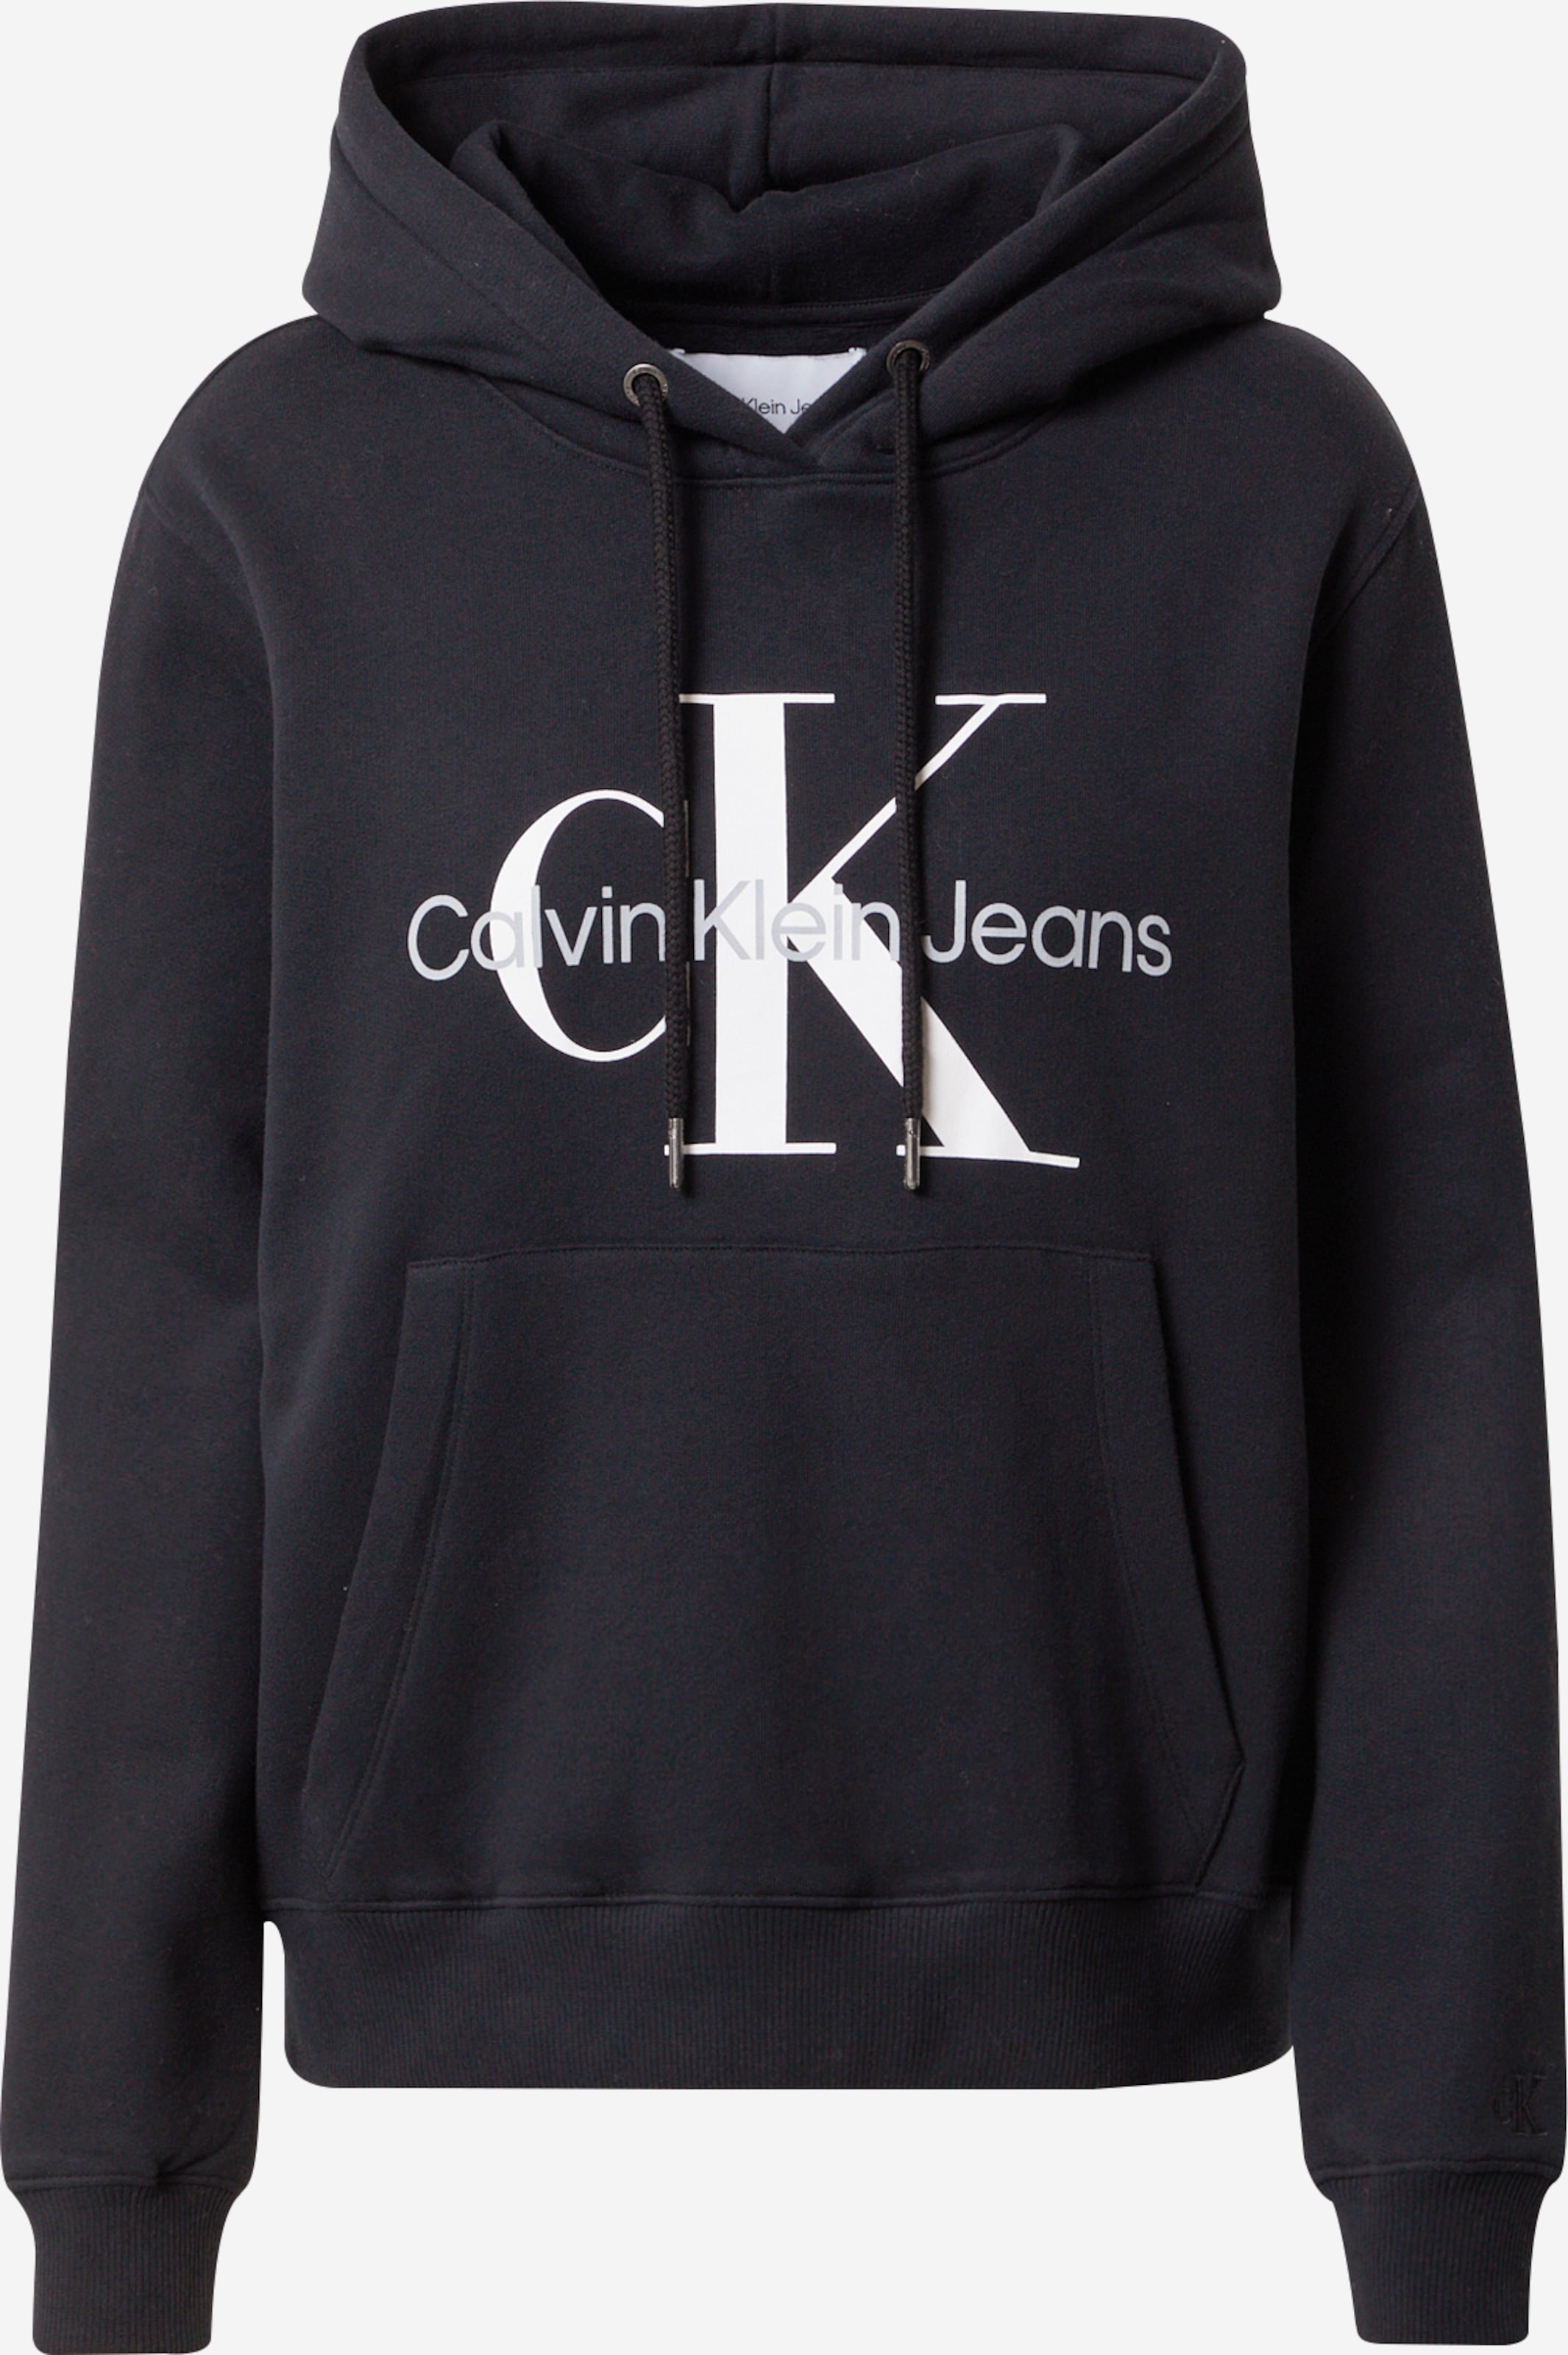 Rynke panden vogn Centrum Calvin Klein Jeans Sweatshirt i Sort | ABOUT YOU